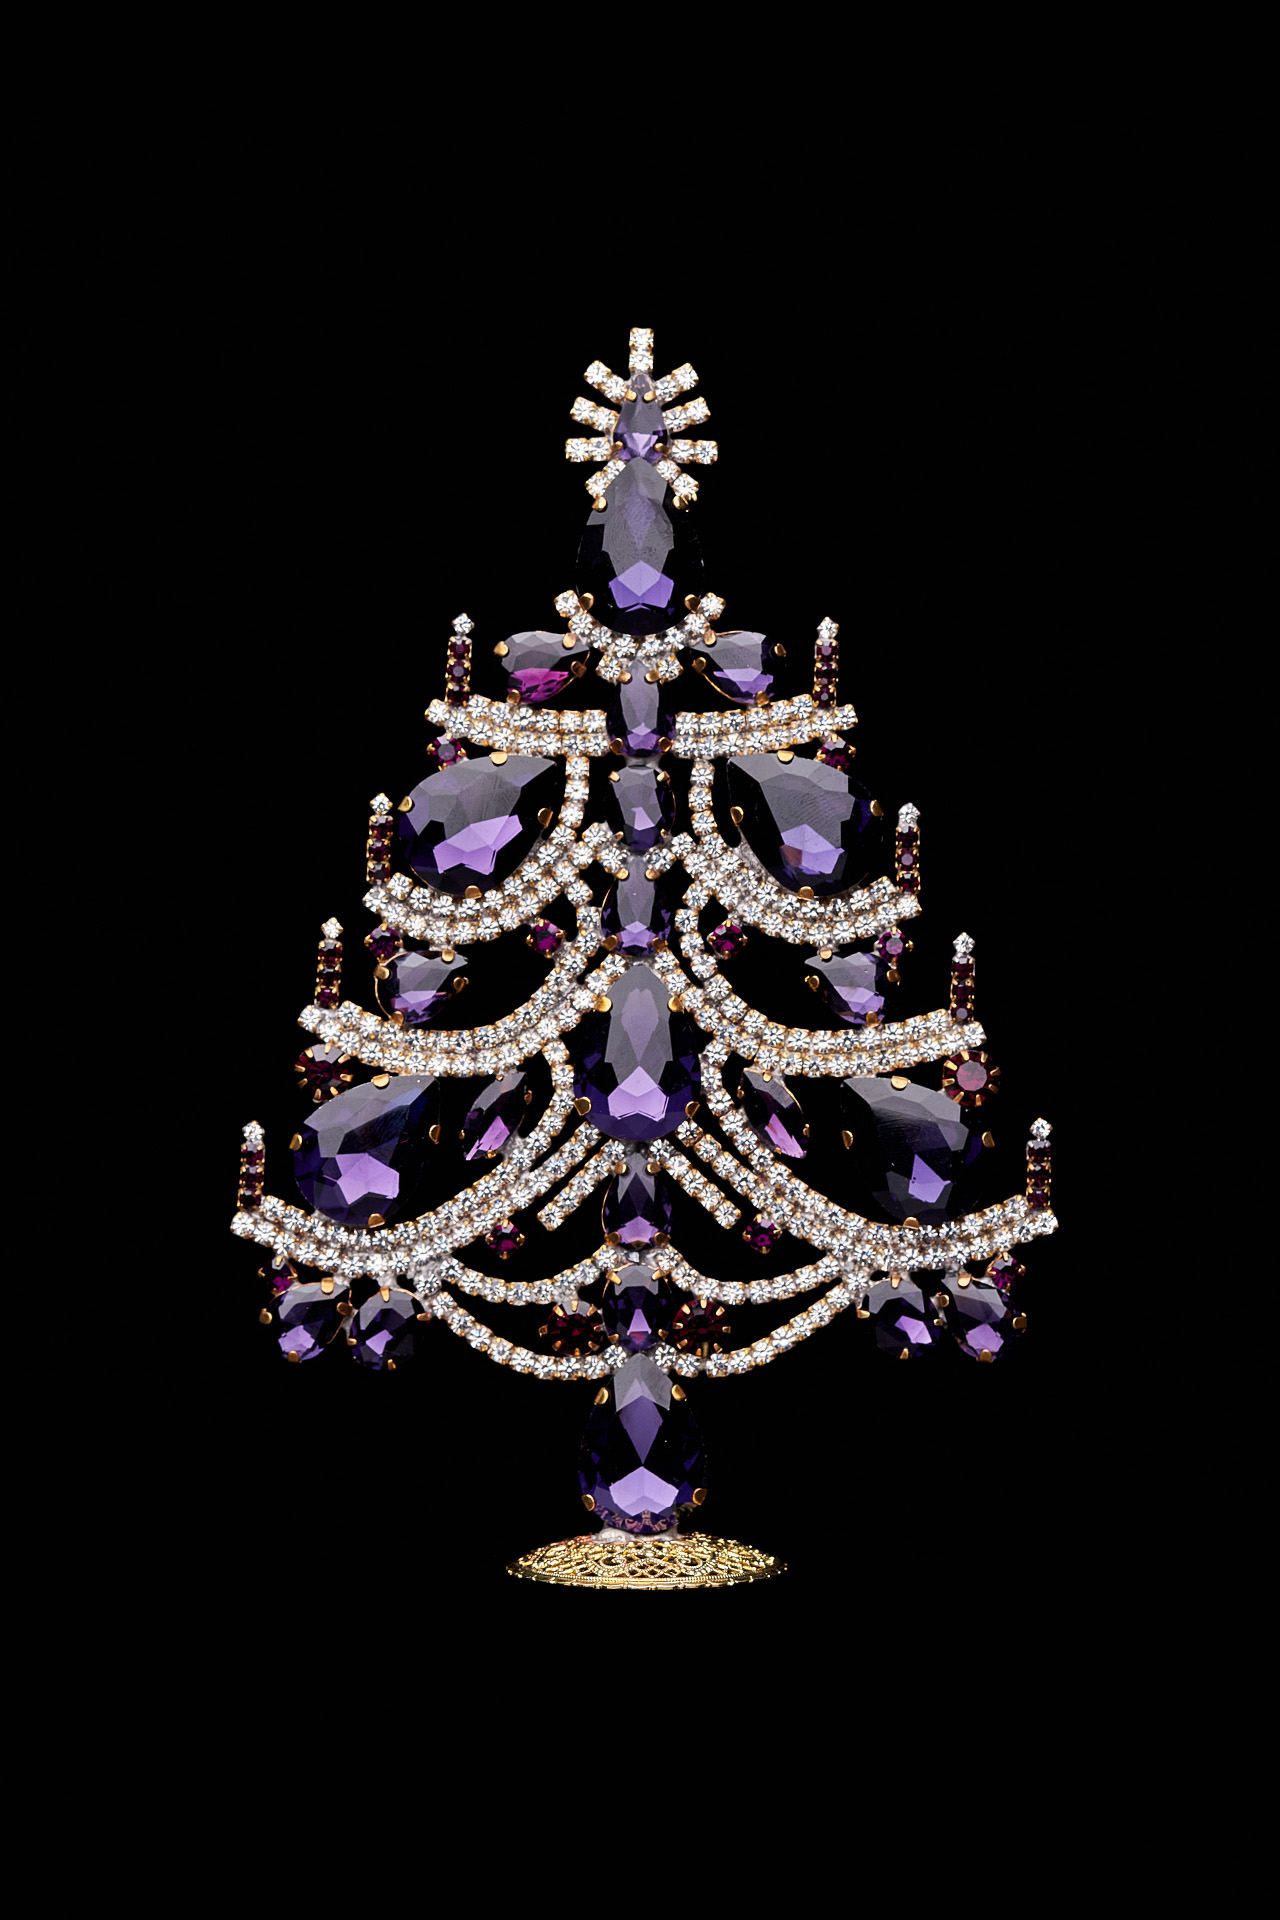 Charming Christmas tree handcrafted with purple rhinestones